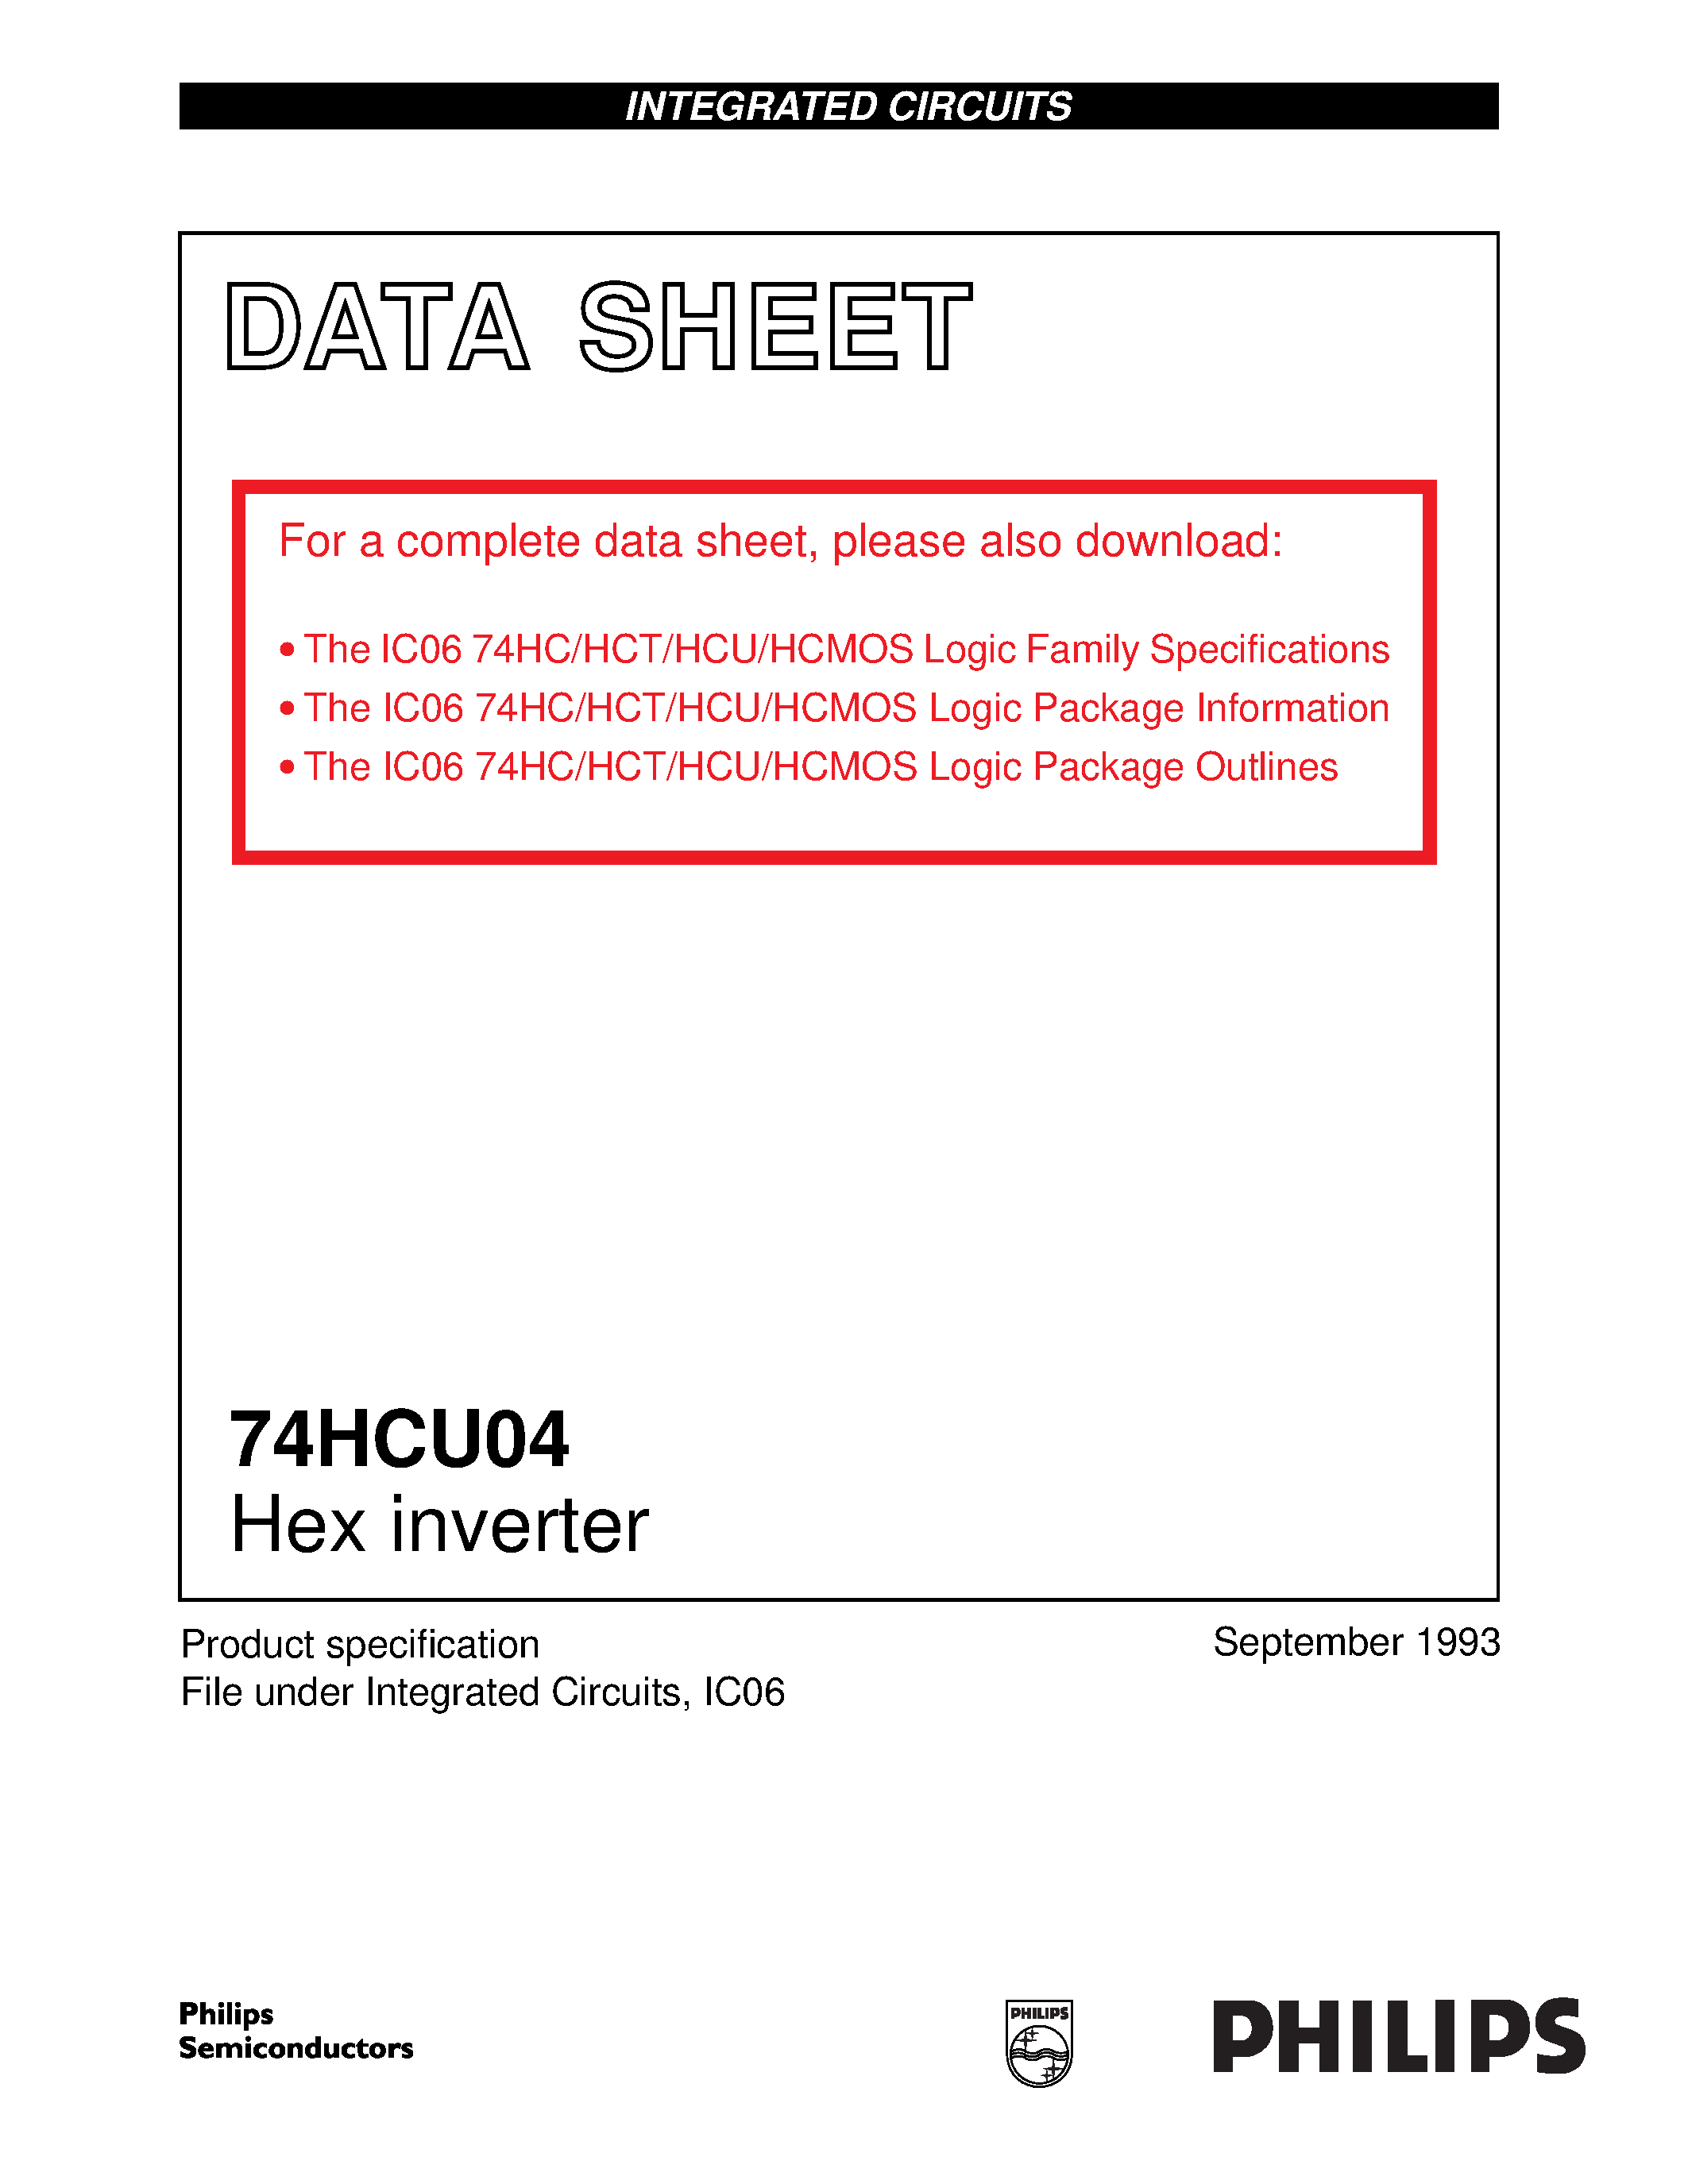 Даташит 74HCU04 - Hex inverter страница 1